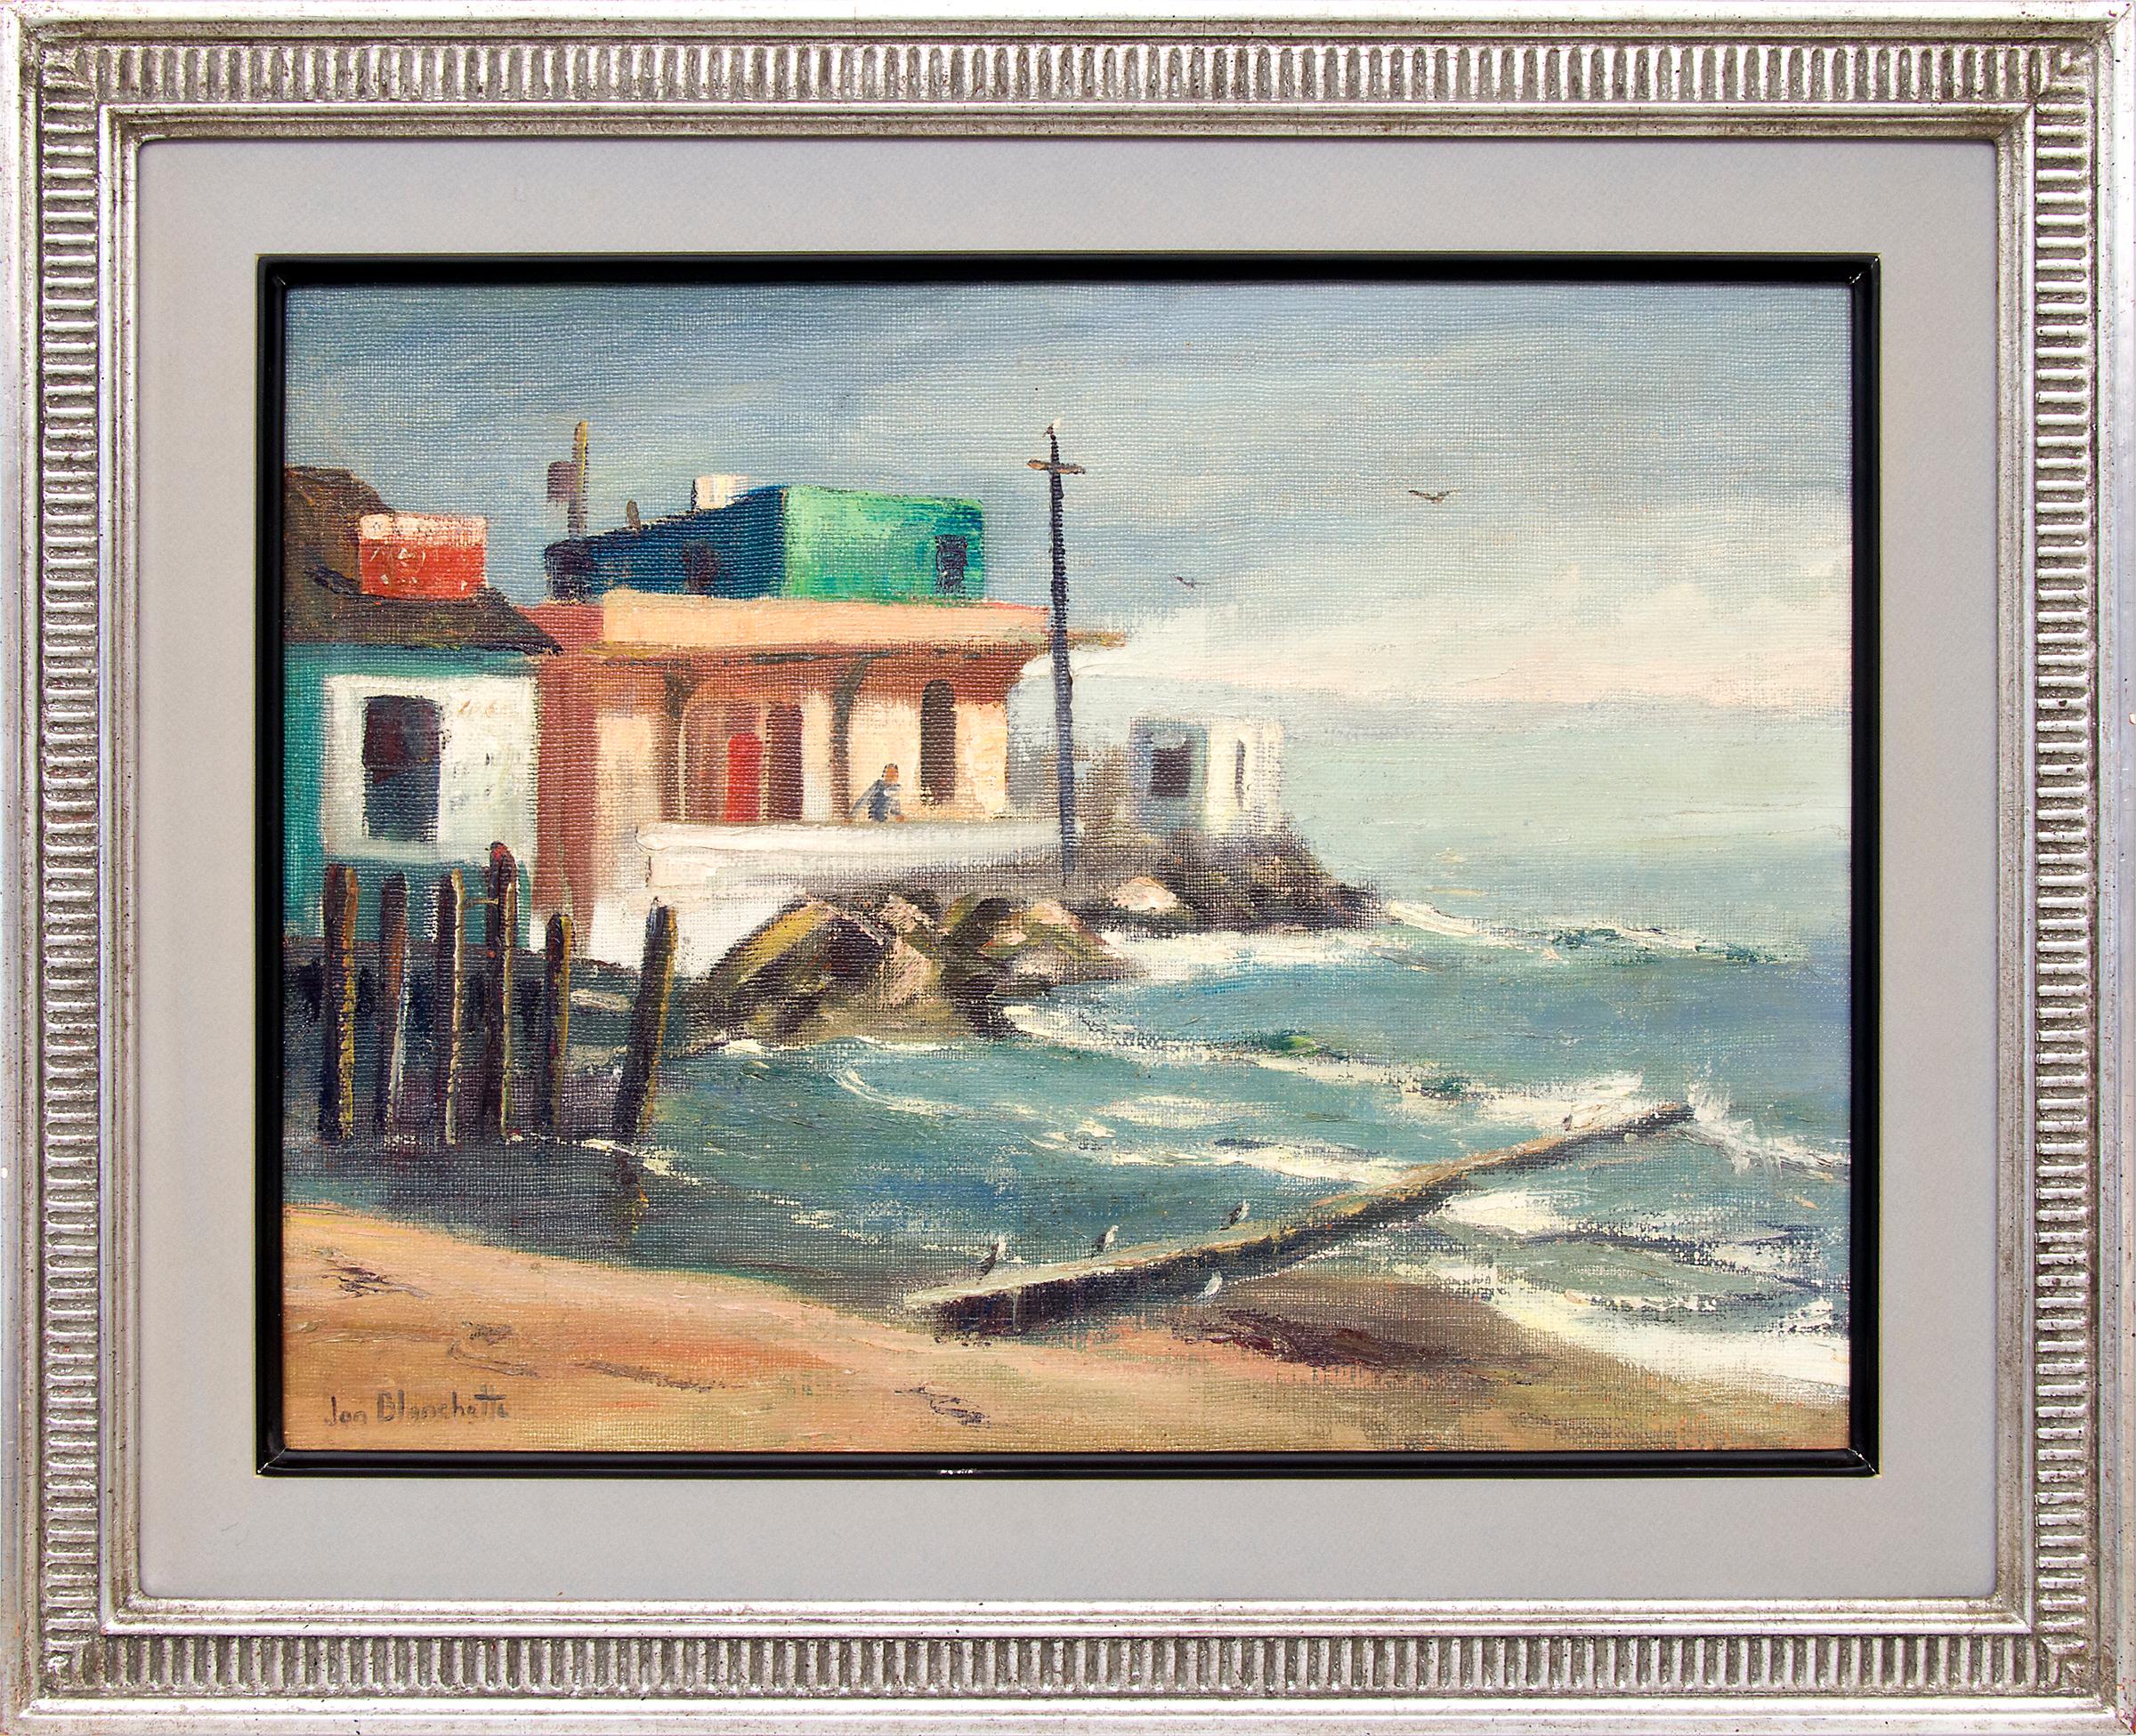 Capitola, California, 1950s Framed California Seascape Marine Oil Painting